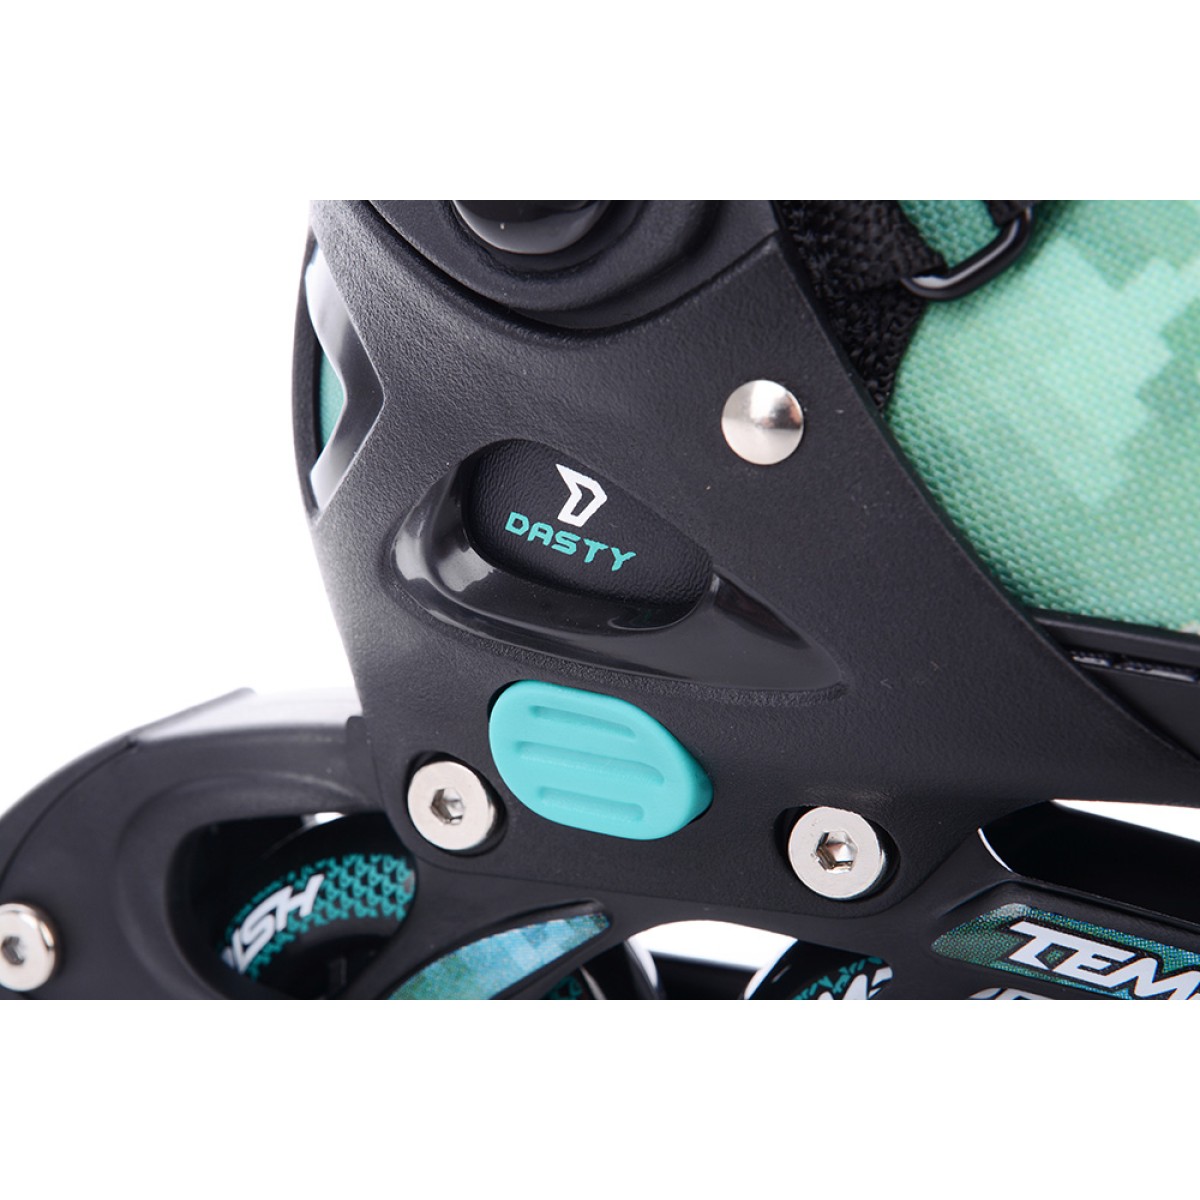 DASTY adjustable roller skates TEMPISH - view 11